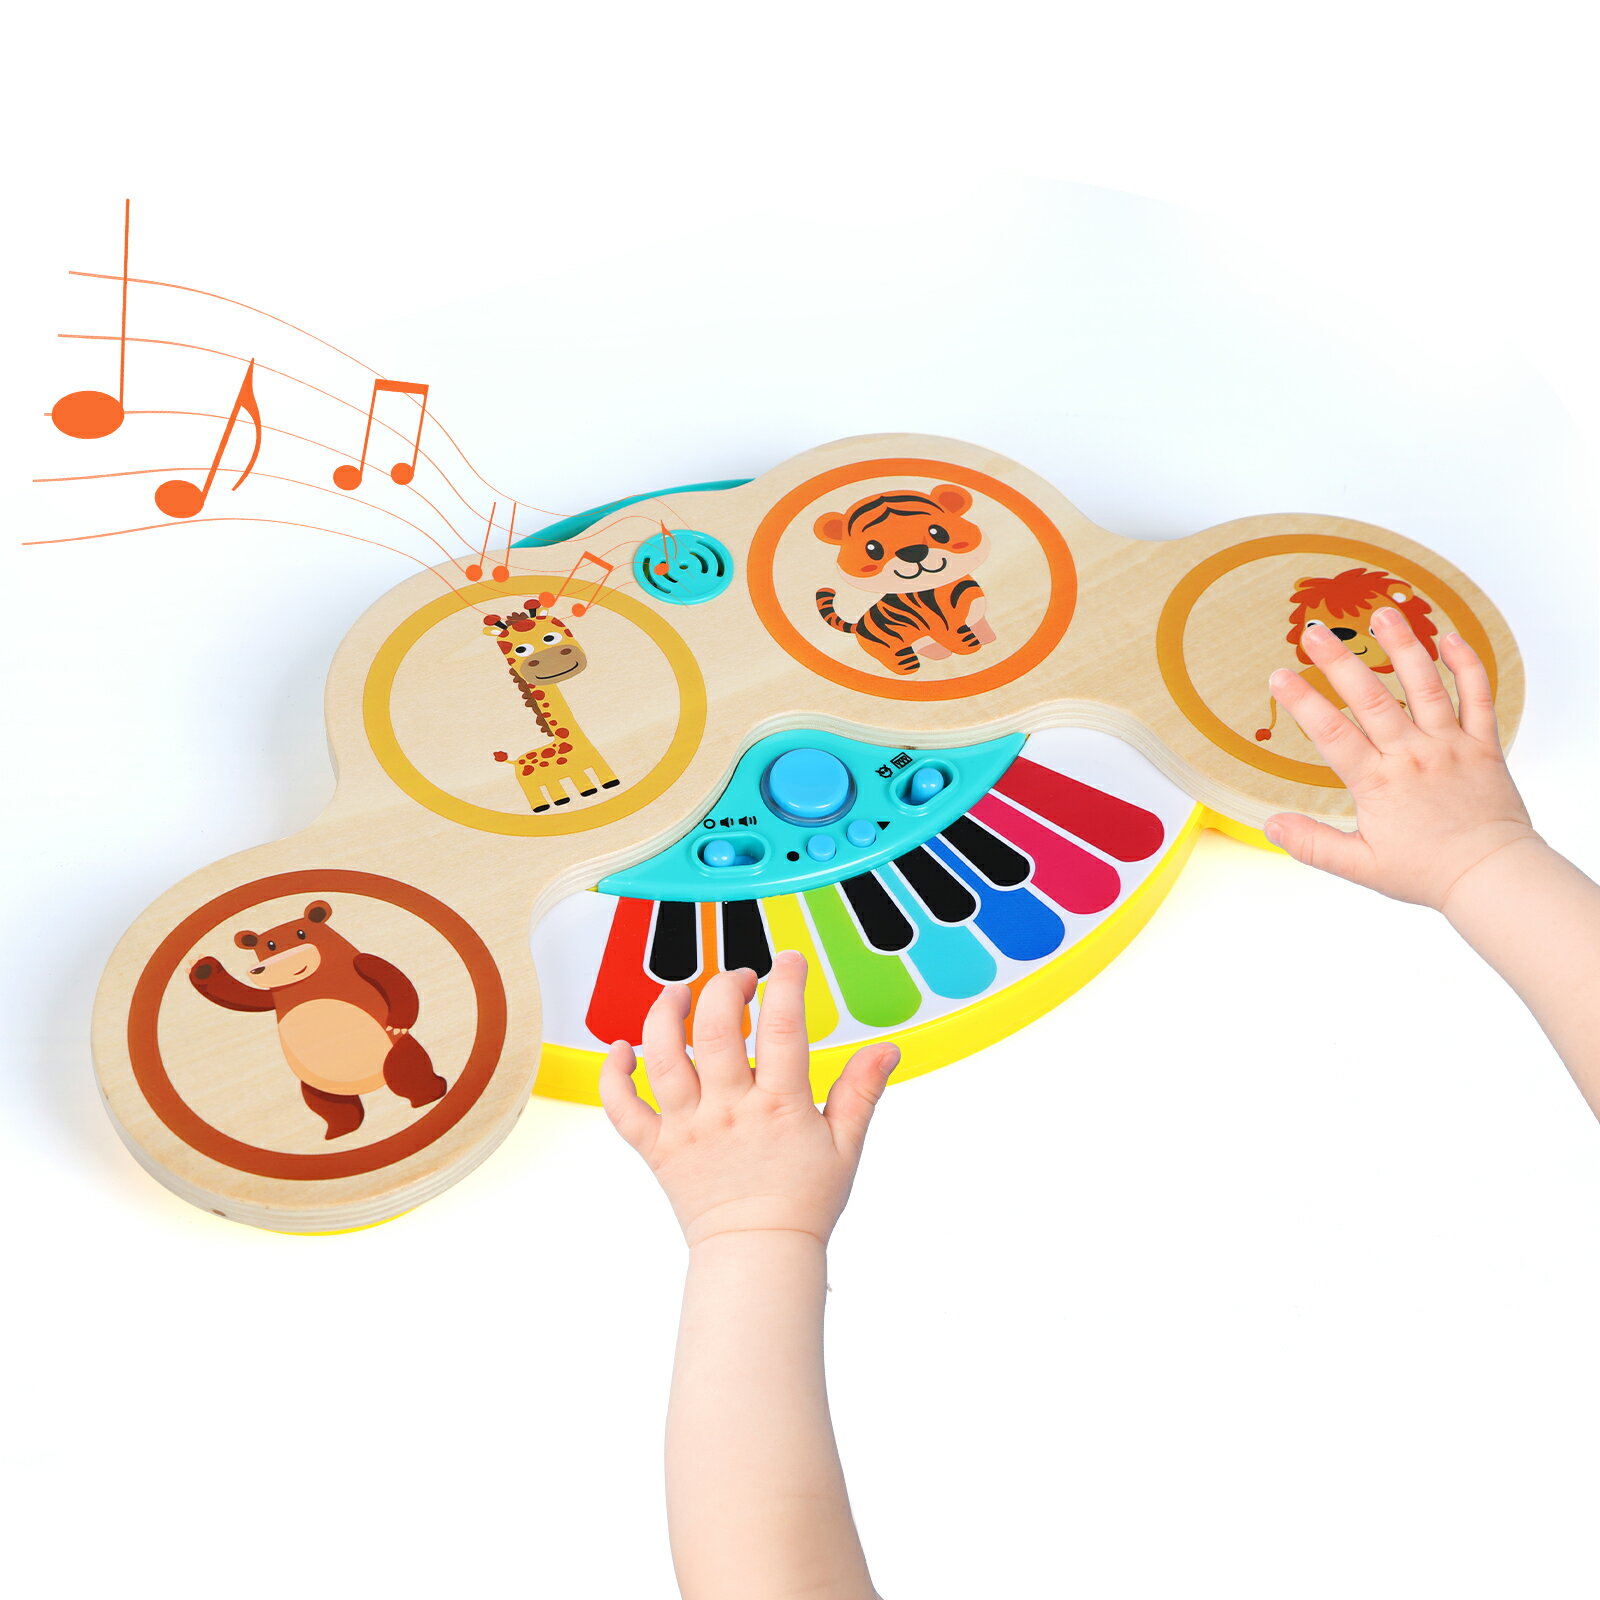 CuteStone ピアノ おもちゃ 木製 ドラム おもちゃ ミニピアノ 楽器玩具 4種類ドラムモード 6曲の音楽 音量調整 録音再生 知育 音感 教育 練習 室内 遊び 子供 幼児 誕生日 1 歳 2 歳 3 歳 4 歳 5 歳 6 歳 子供 ピアノおもちゃ